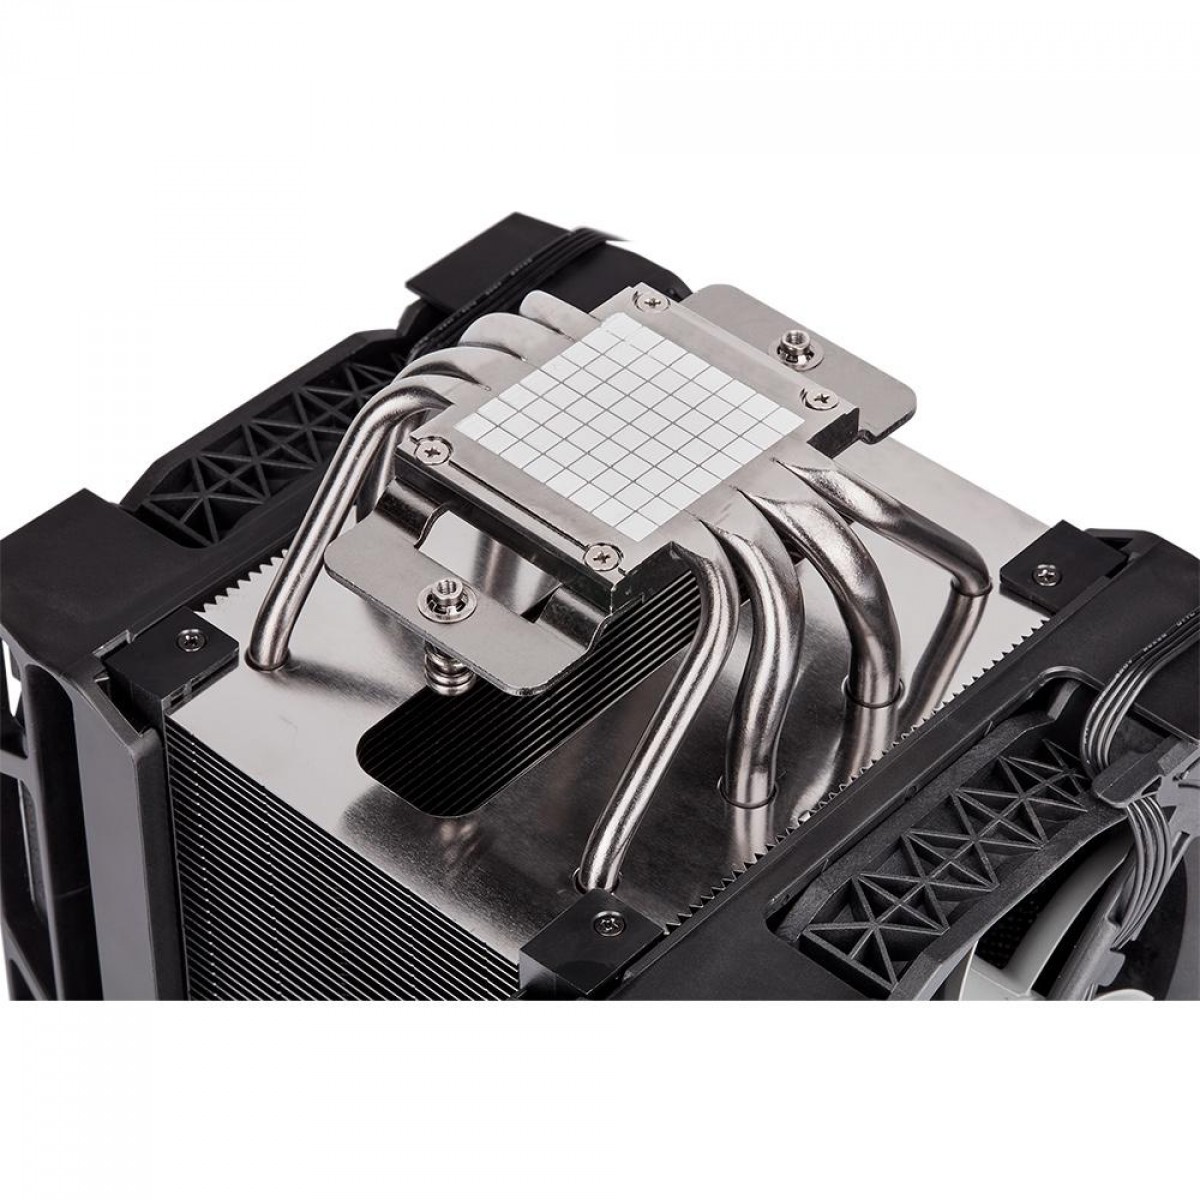 Cooler para Processador Corsair A500, Fan Duplo, Intel-AMD, CT-9010003-WW